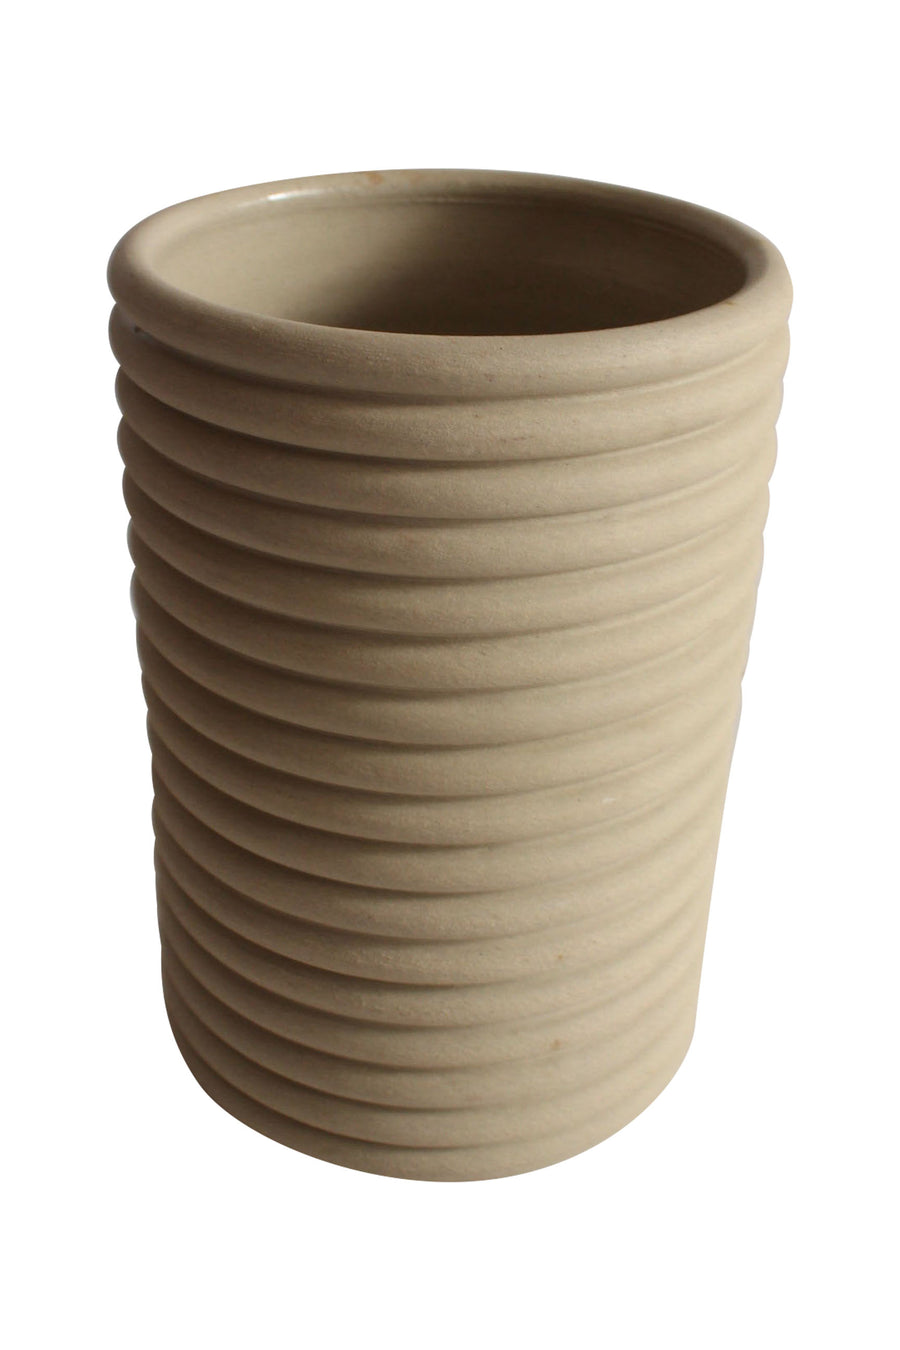 Ribbed Vase